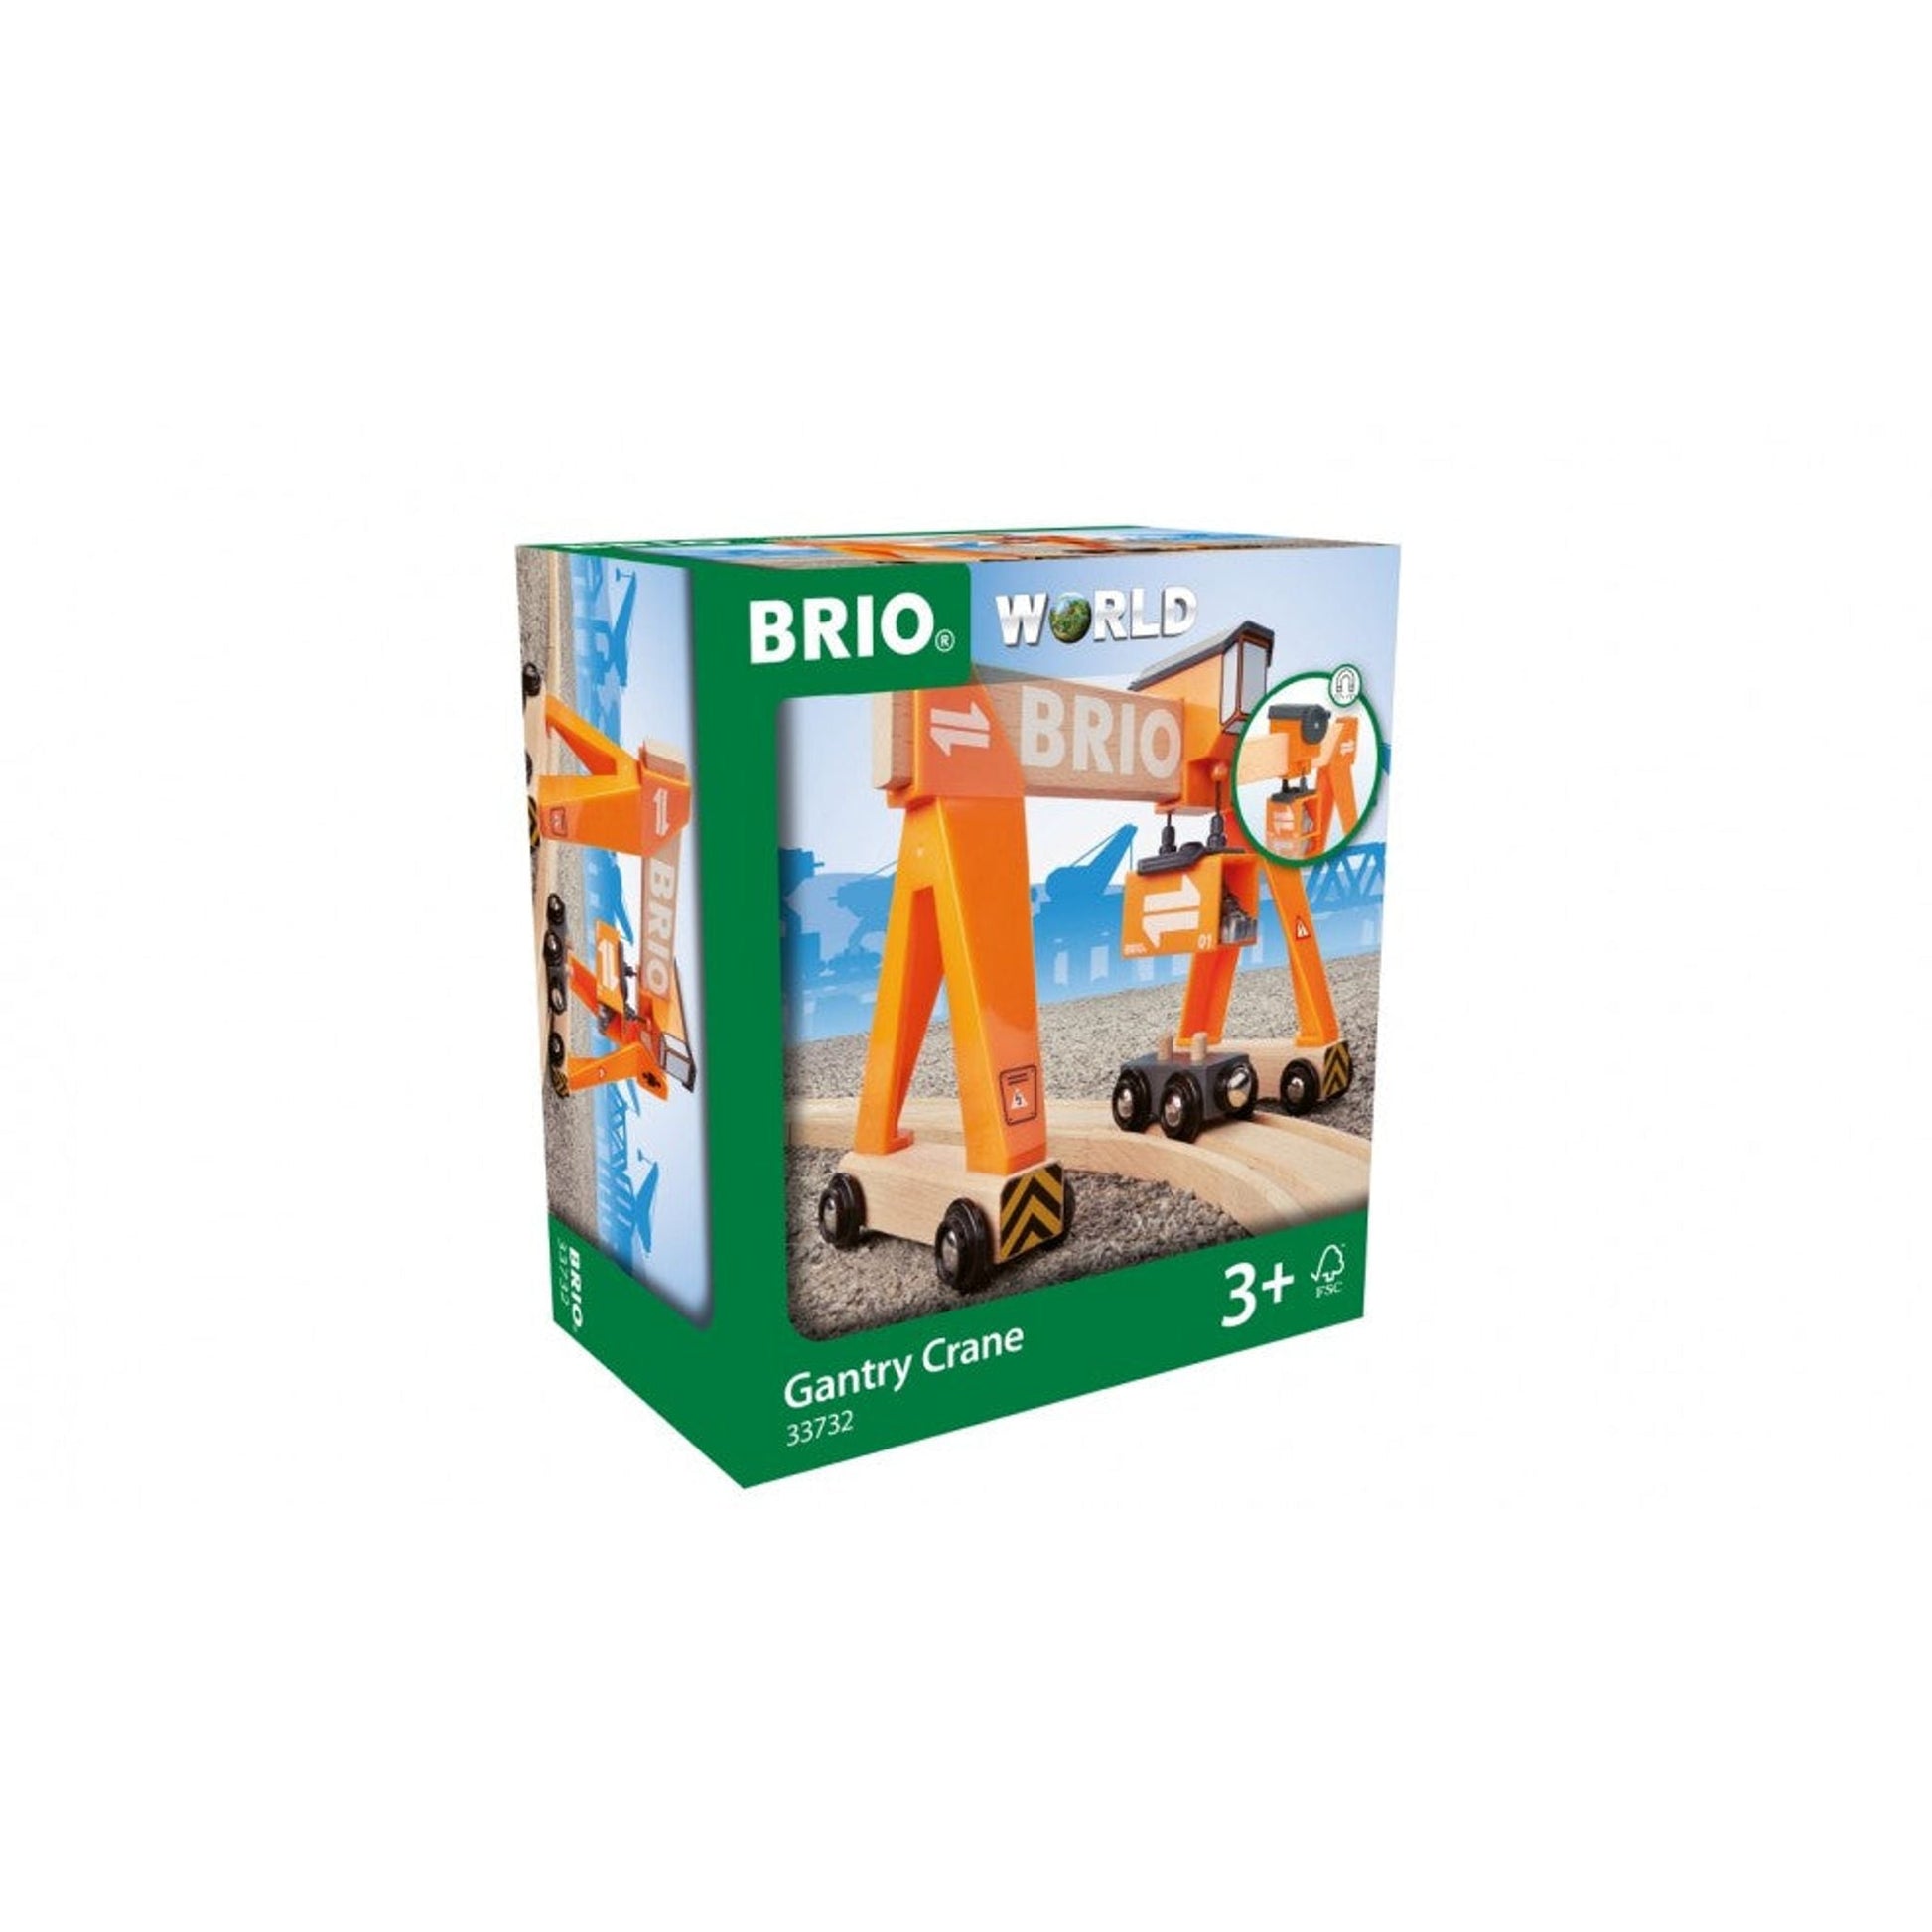 BRIO Crane - Gantry Crane 4 pieces - Toybox Tales